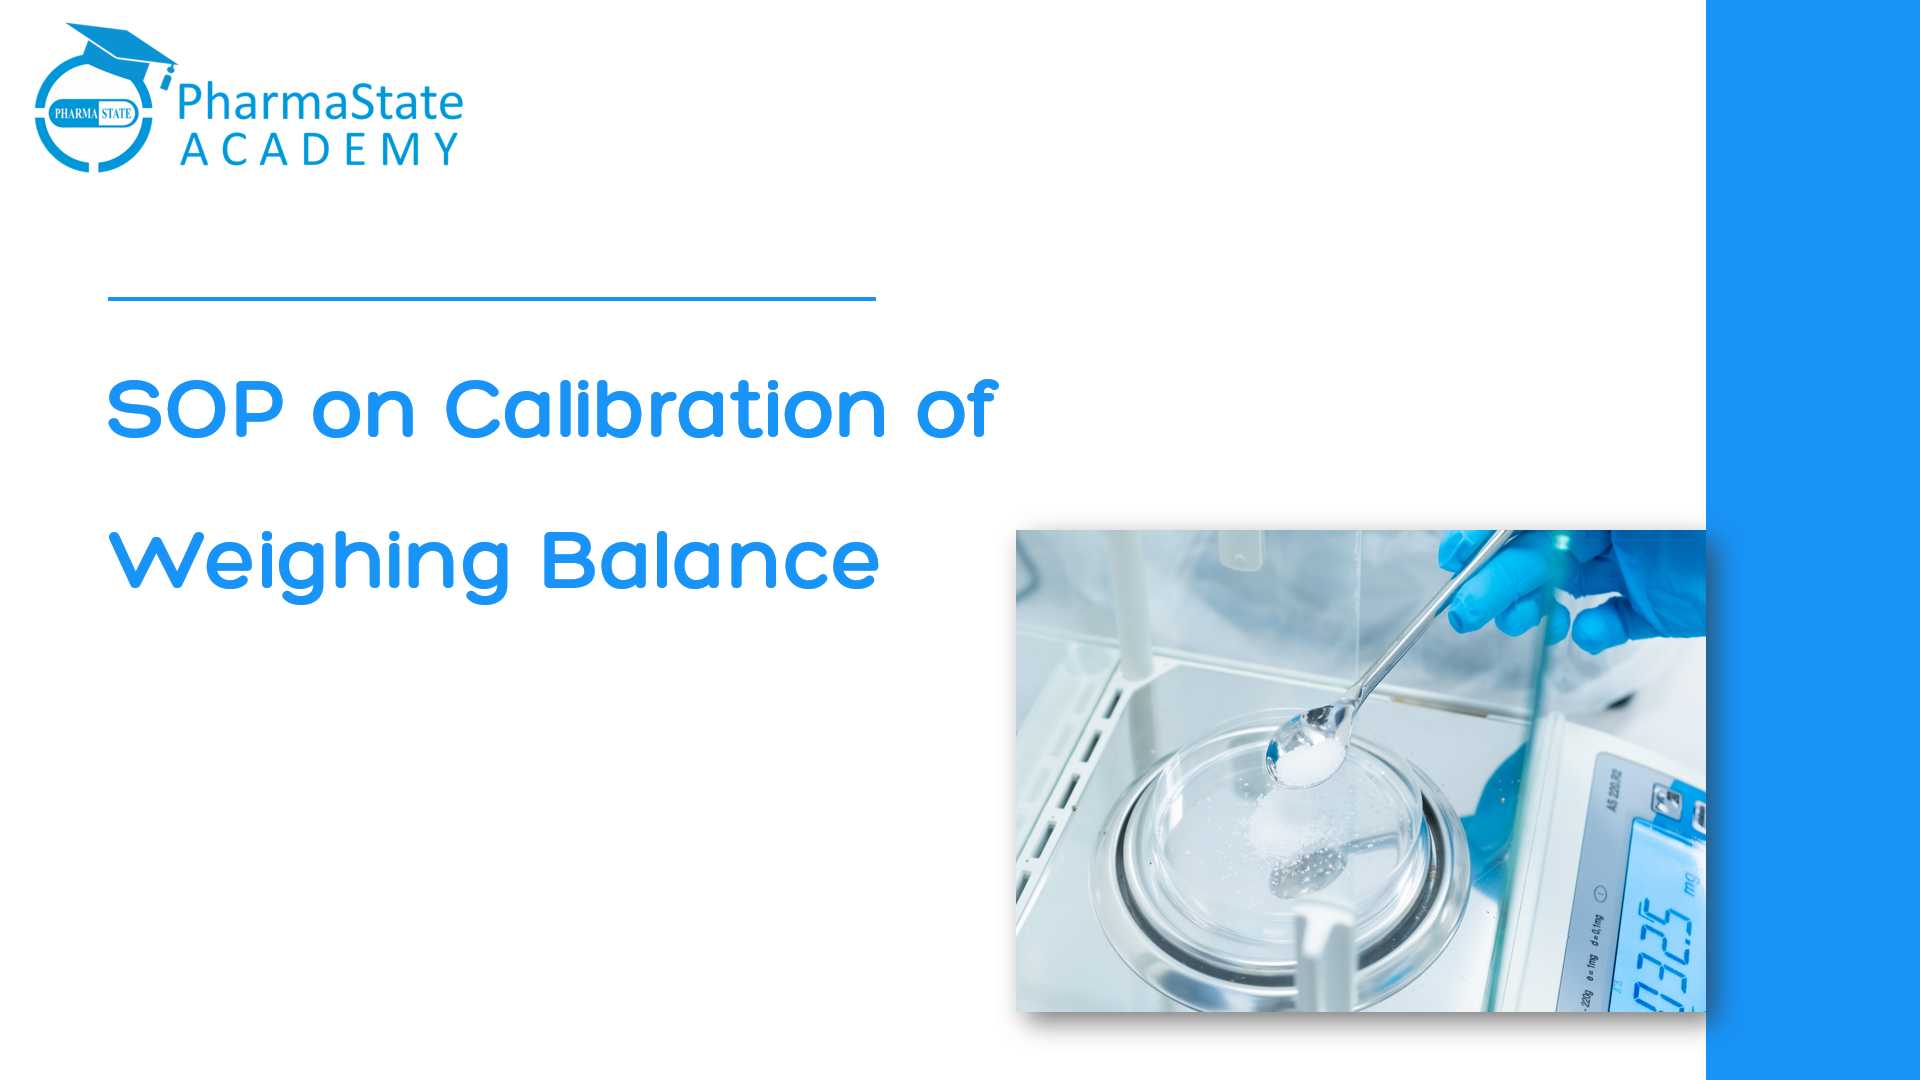 SOP on Calibration of Weighing Balance